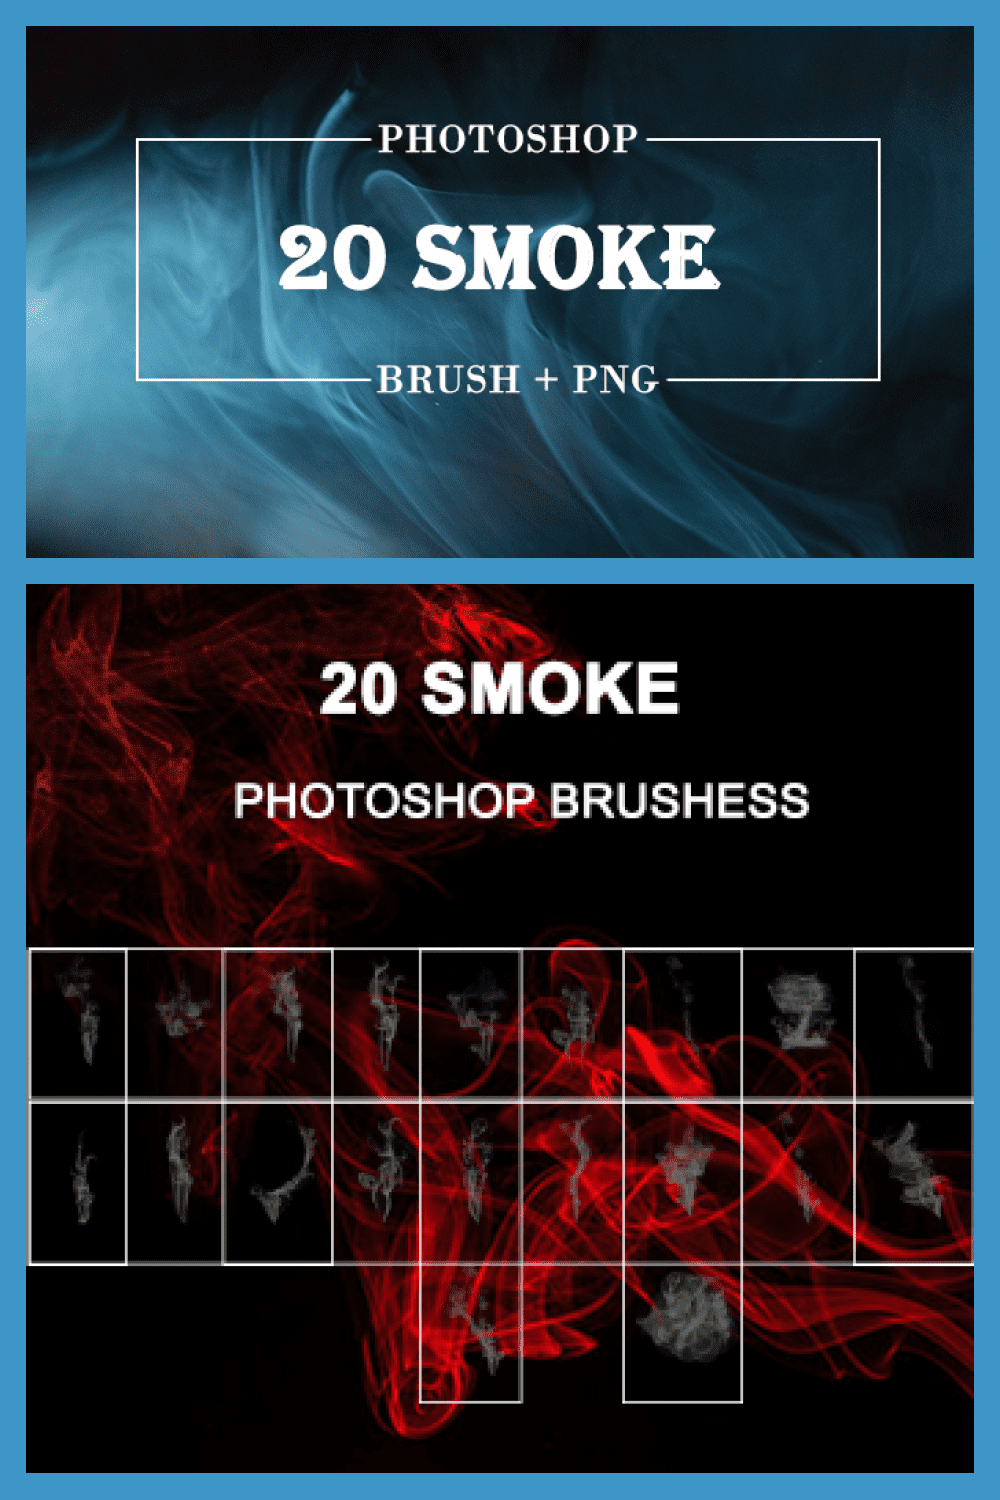 20 Smoke Photoshop Brush - MasterBundles - Pinterest Collage Image.